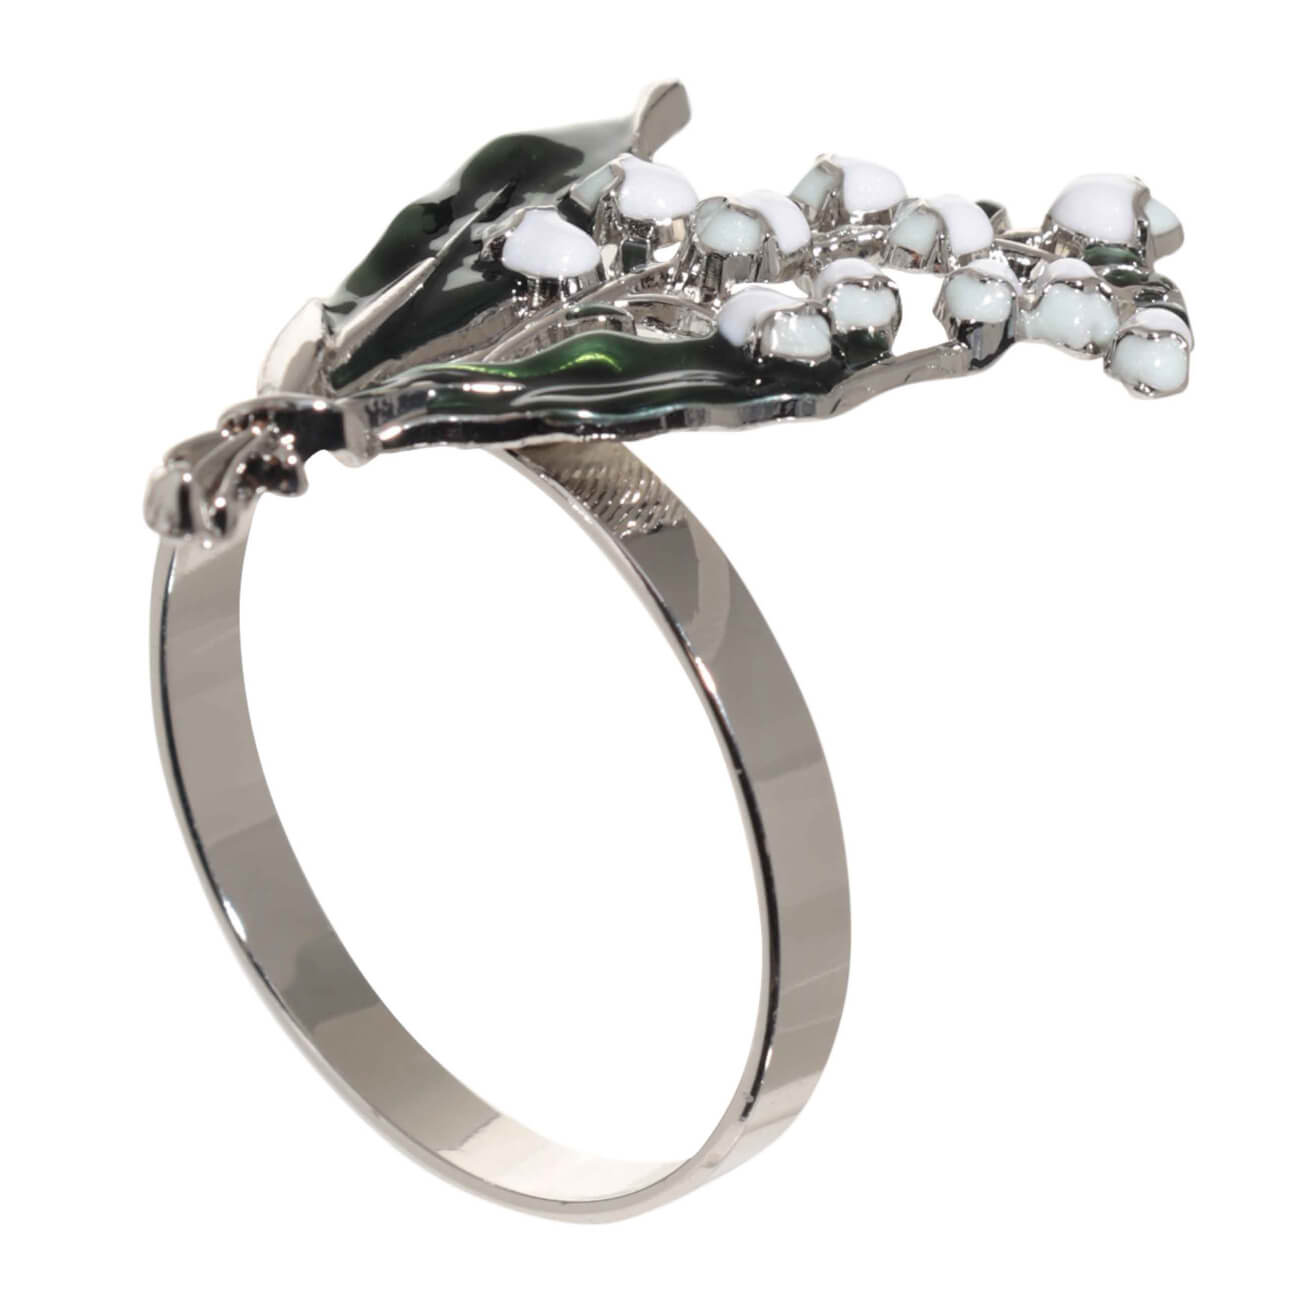 кольцо для салфеток 6 см металл серебристое ветка с листьями print Кольцо для салфеток, 5 см, металл, зелено-серебристое, Ландыш с листьями, May-lily